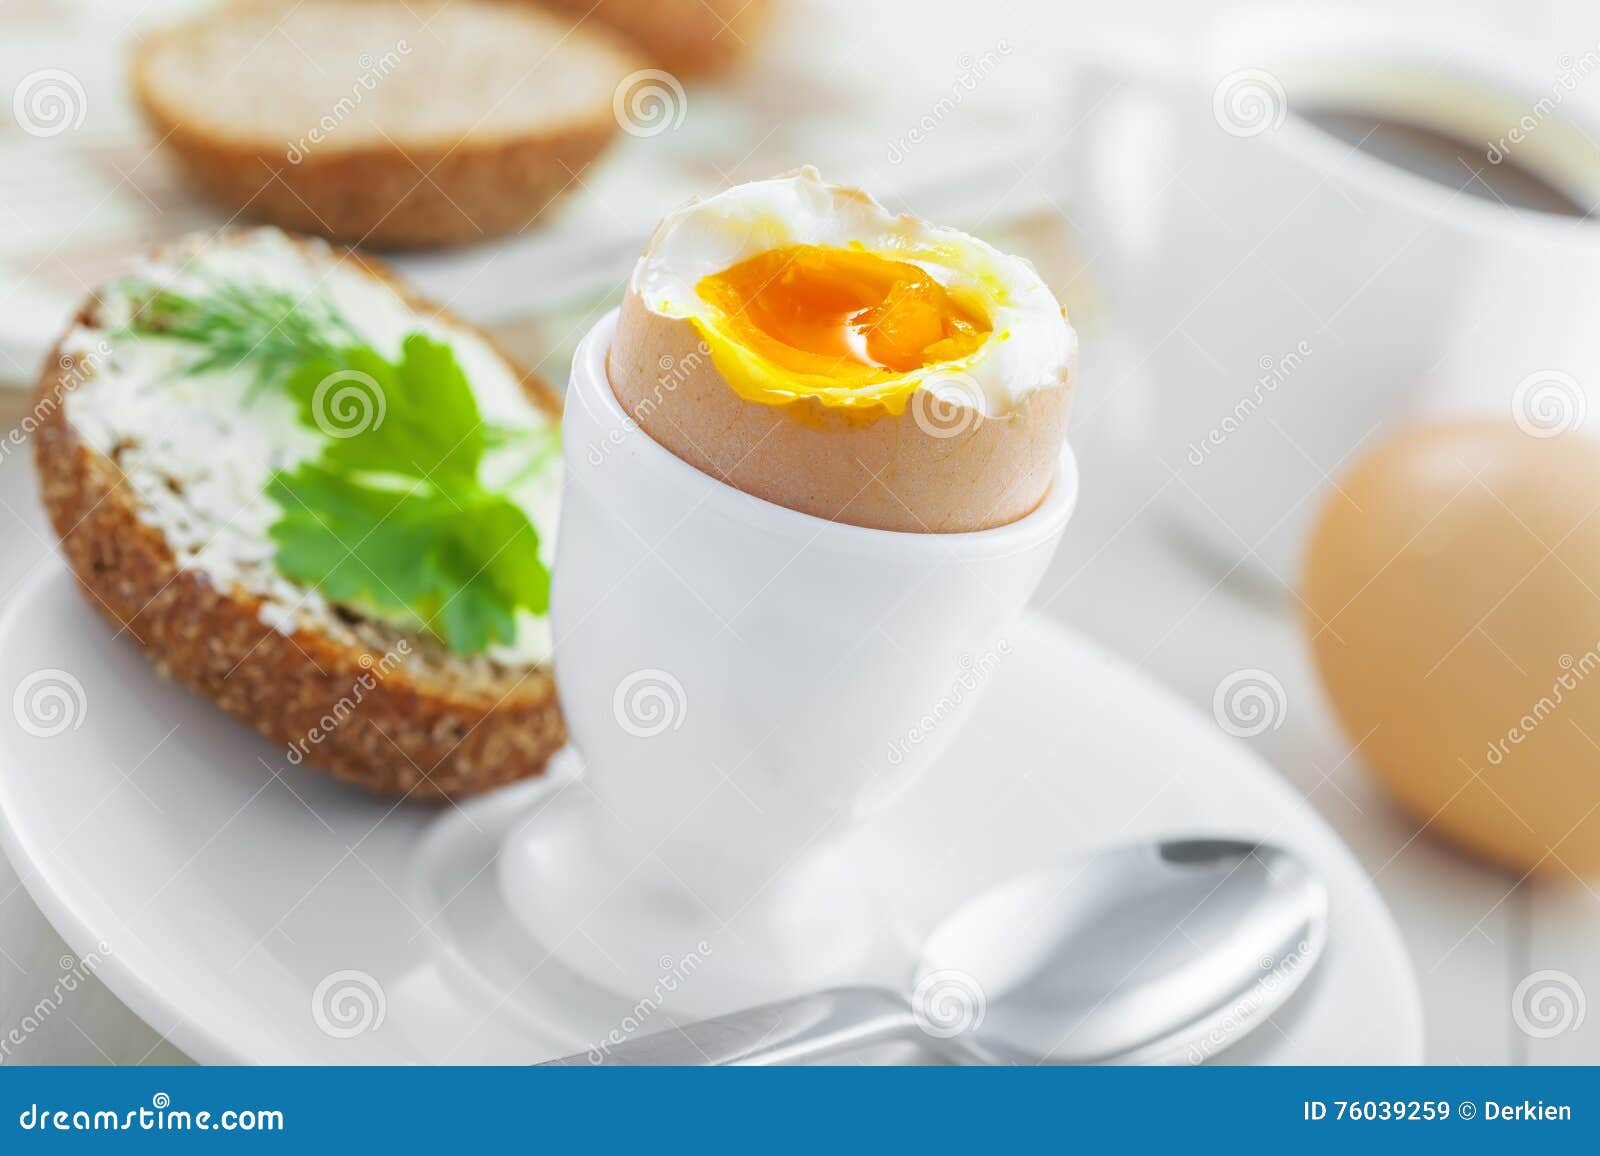 Soft boiled egg breakfast stock image. Image of eggcup - 76039259